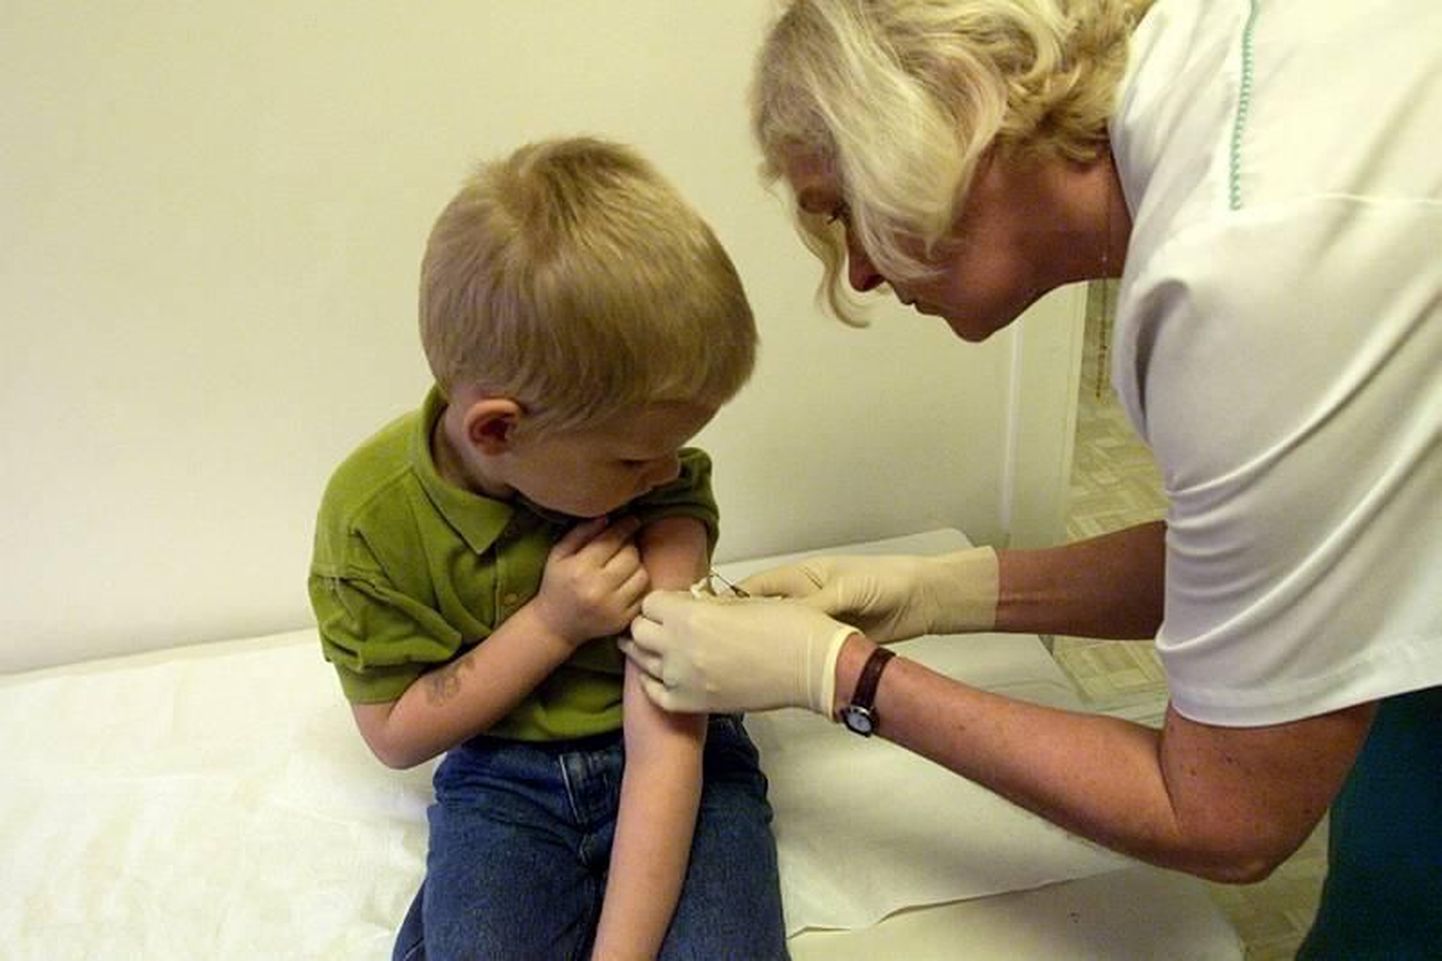 Вакцинирование ребенка.